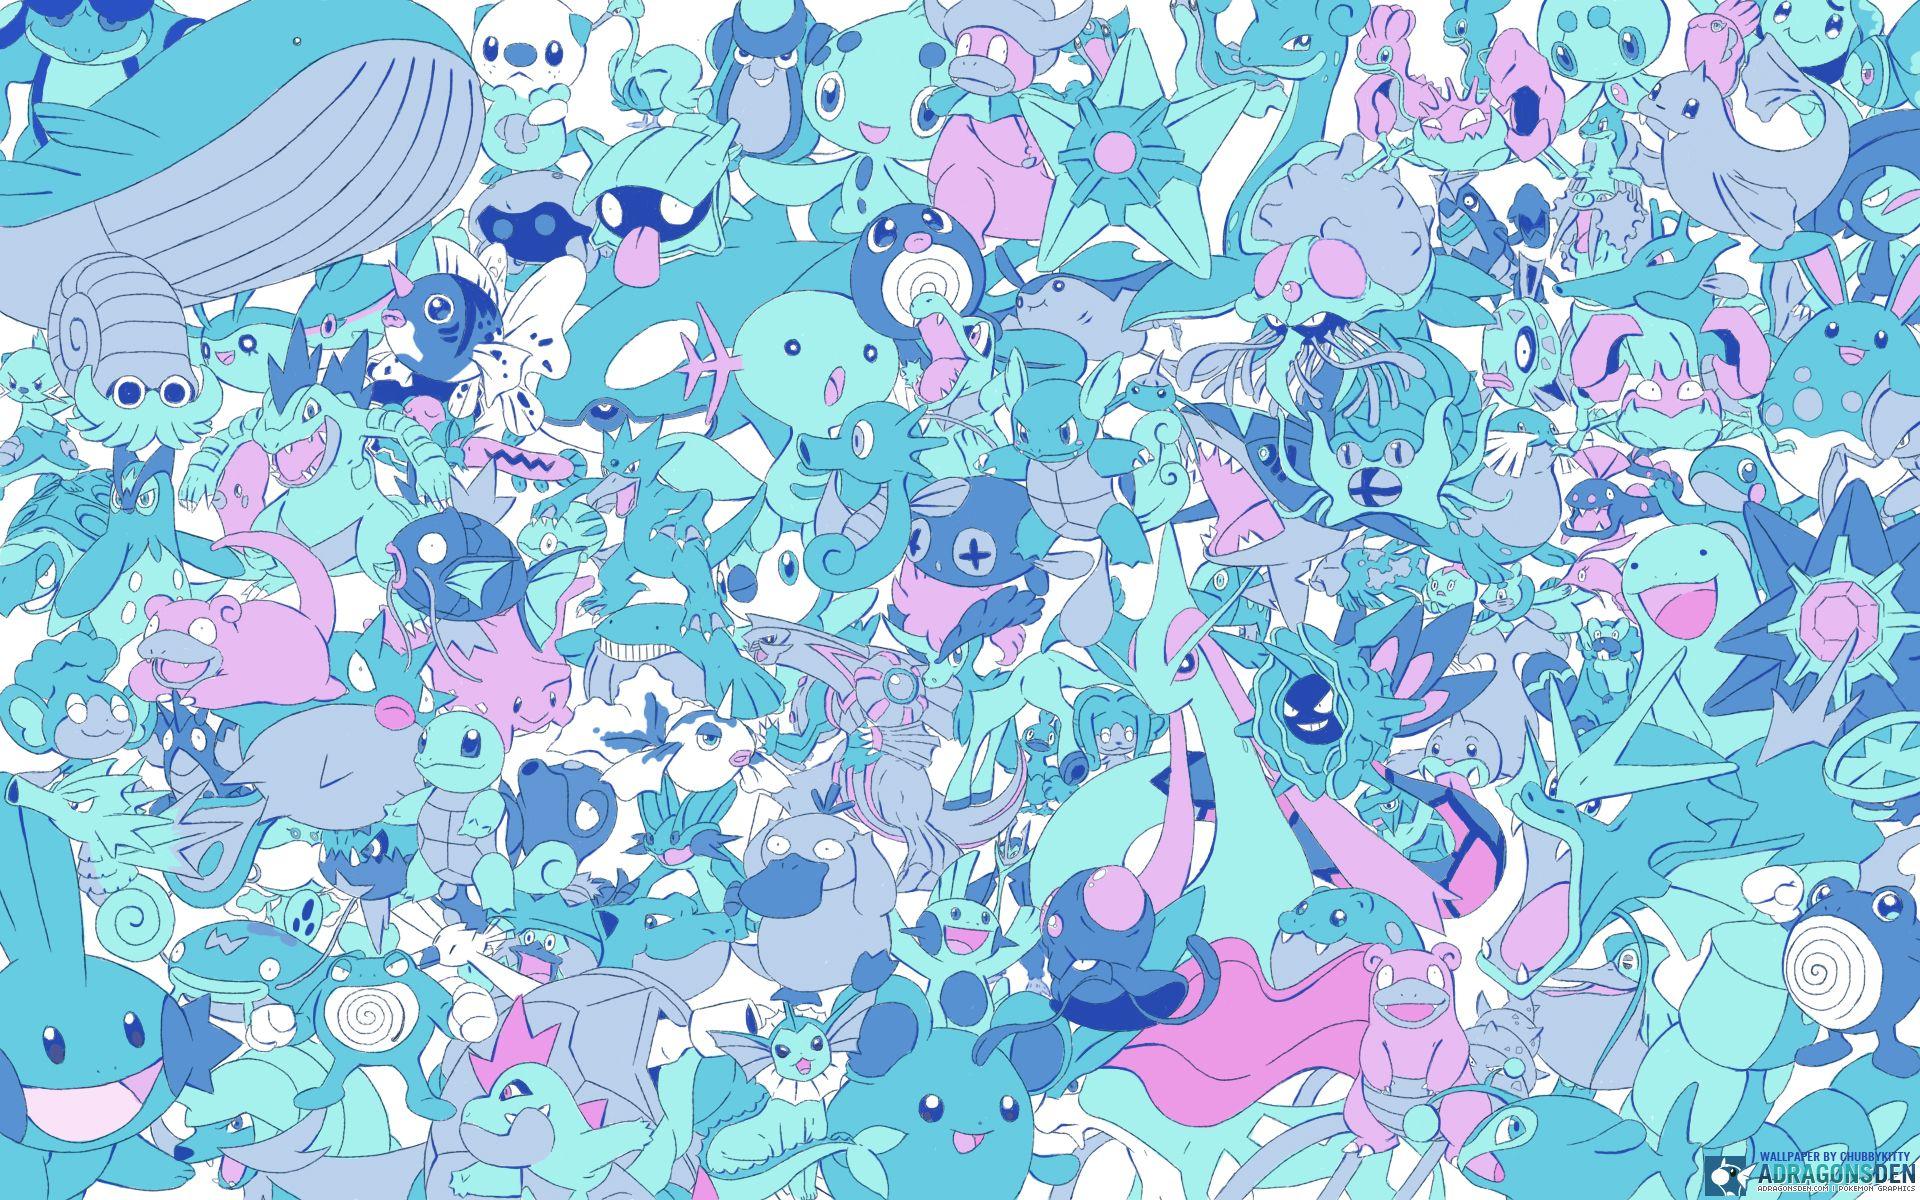 Every Dark Pokemon Wallpaper by LVStarlitSky on deviantART